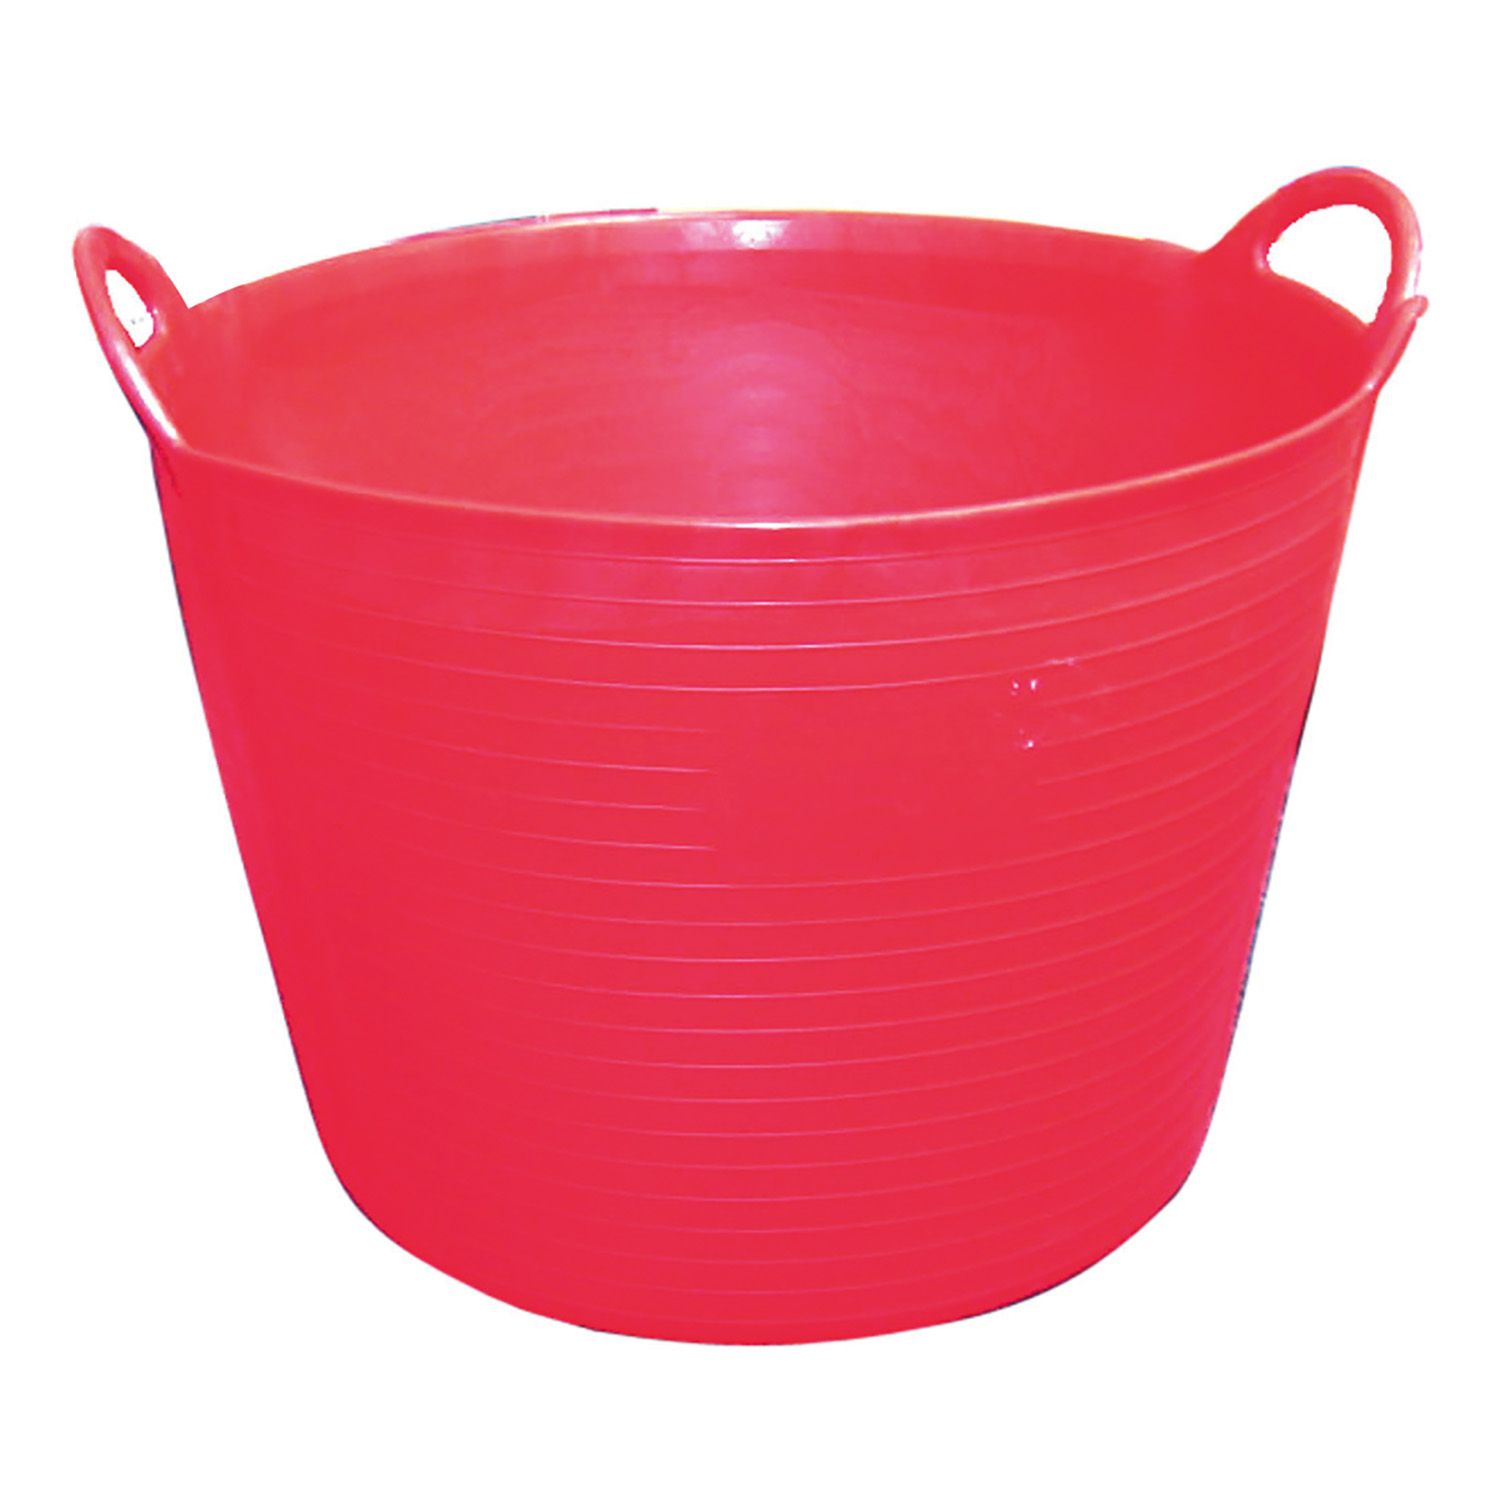 PROSTABLE FLEXI FEED TUB 40 LT RED X 40 LT 40 LT